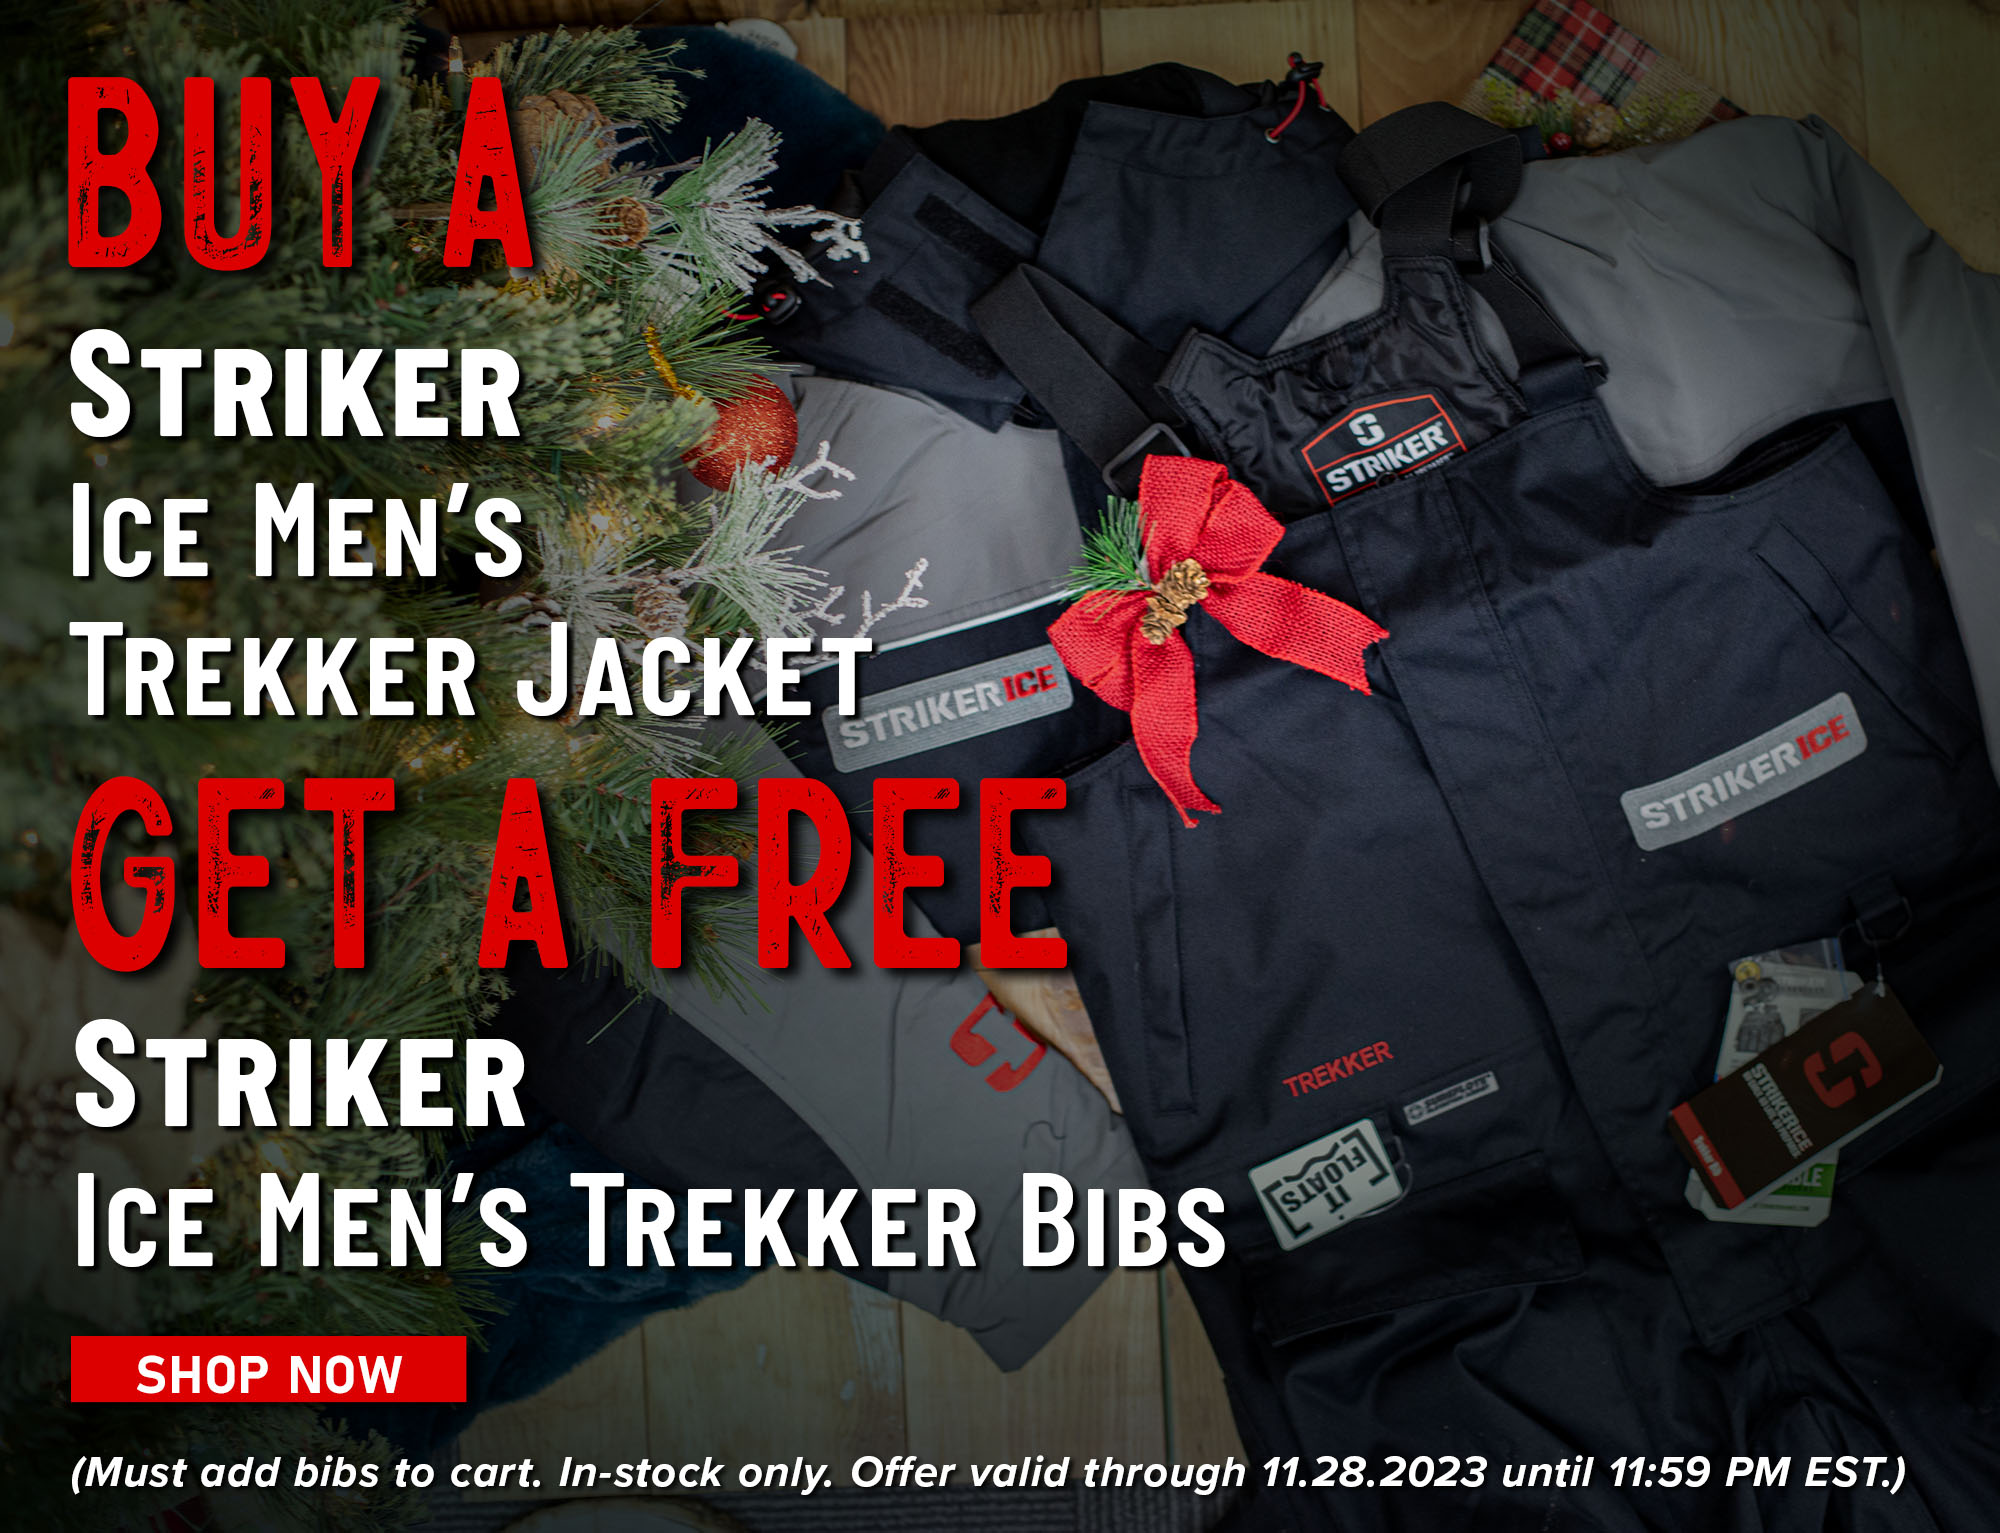 Buy a Striker Ice Men's Trekker Jacket Get a Free Striker Ice Men's Trekker Bibs Shop Now (Must add bibs to cart. In-stock only. Offer valid through 11.28.2023 until 11:59 PM EST.)